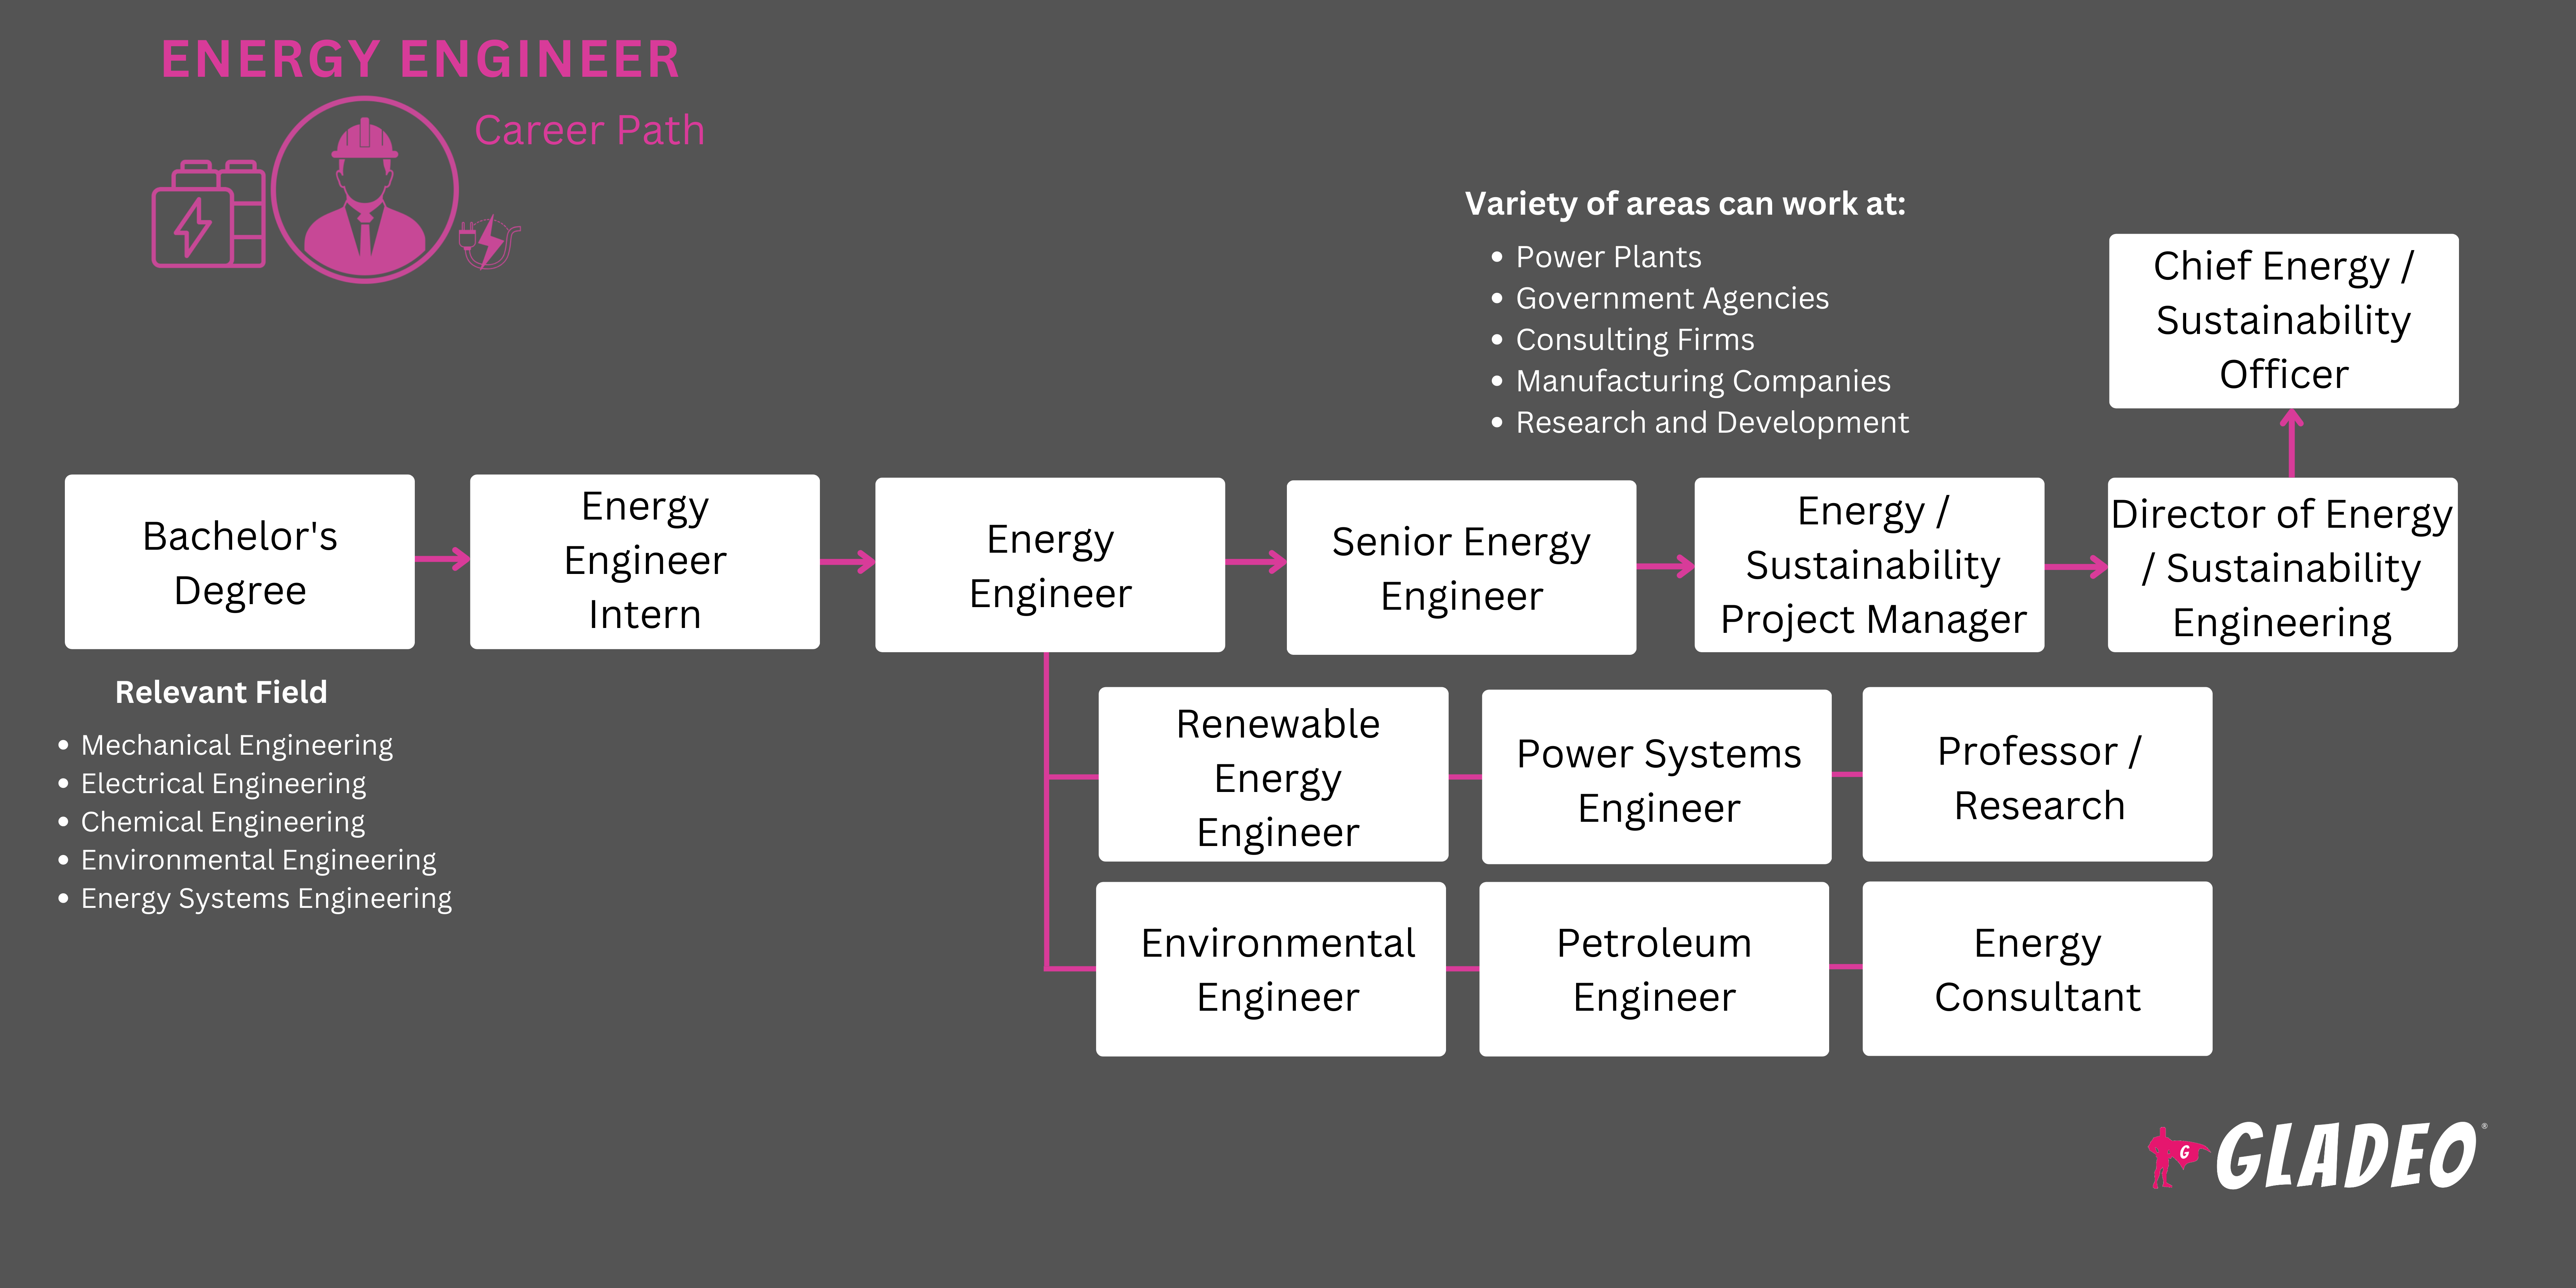 Energy Engineer